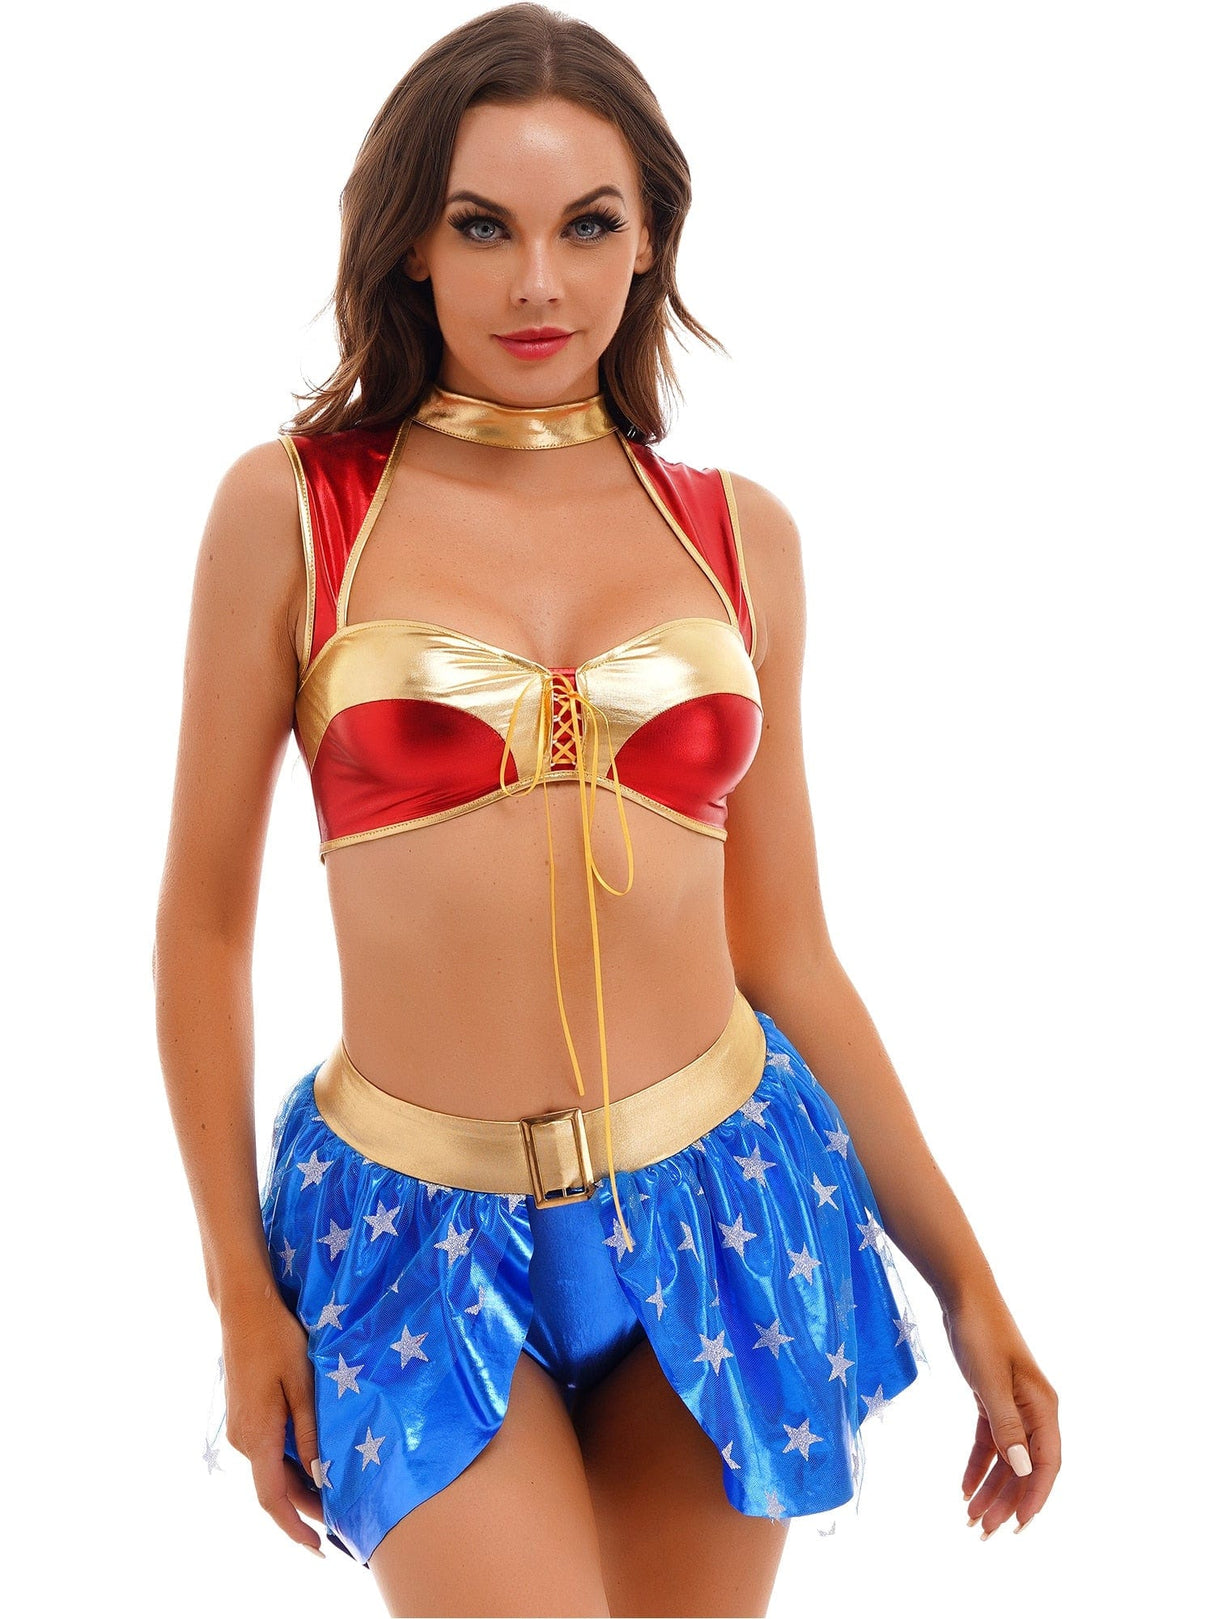 Tempting Wonder Woman Set - AMOROUSDRESS